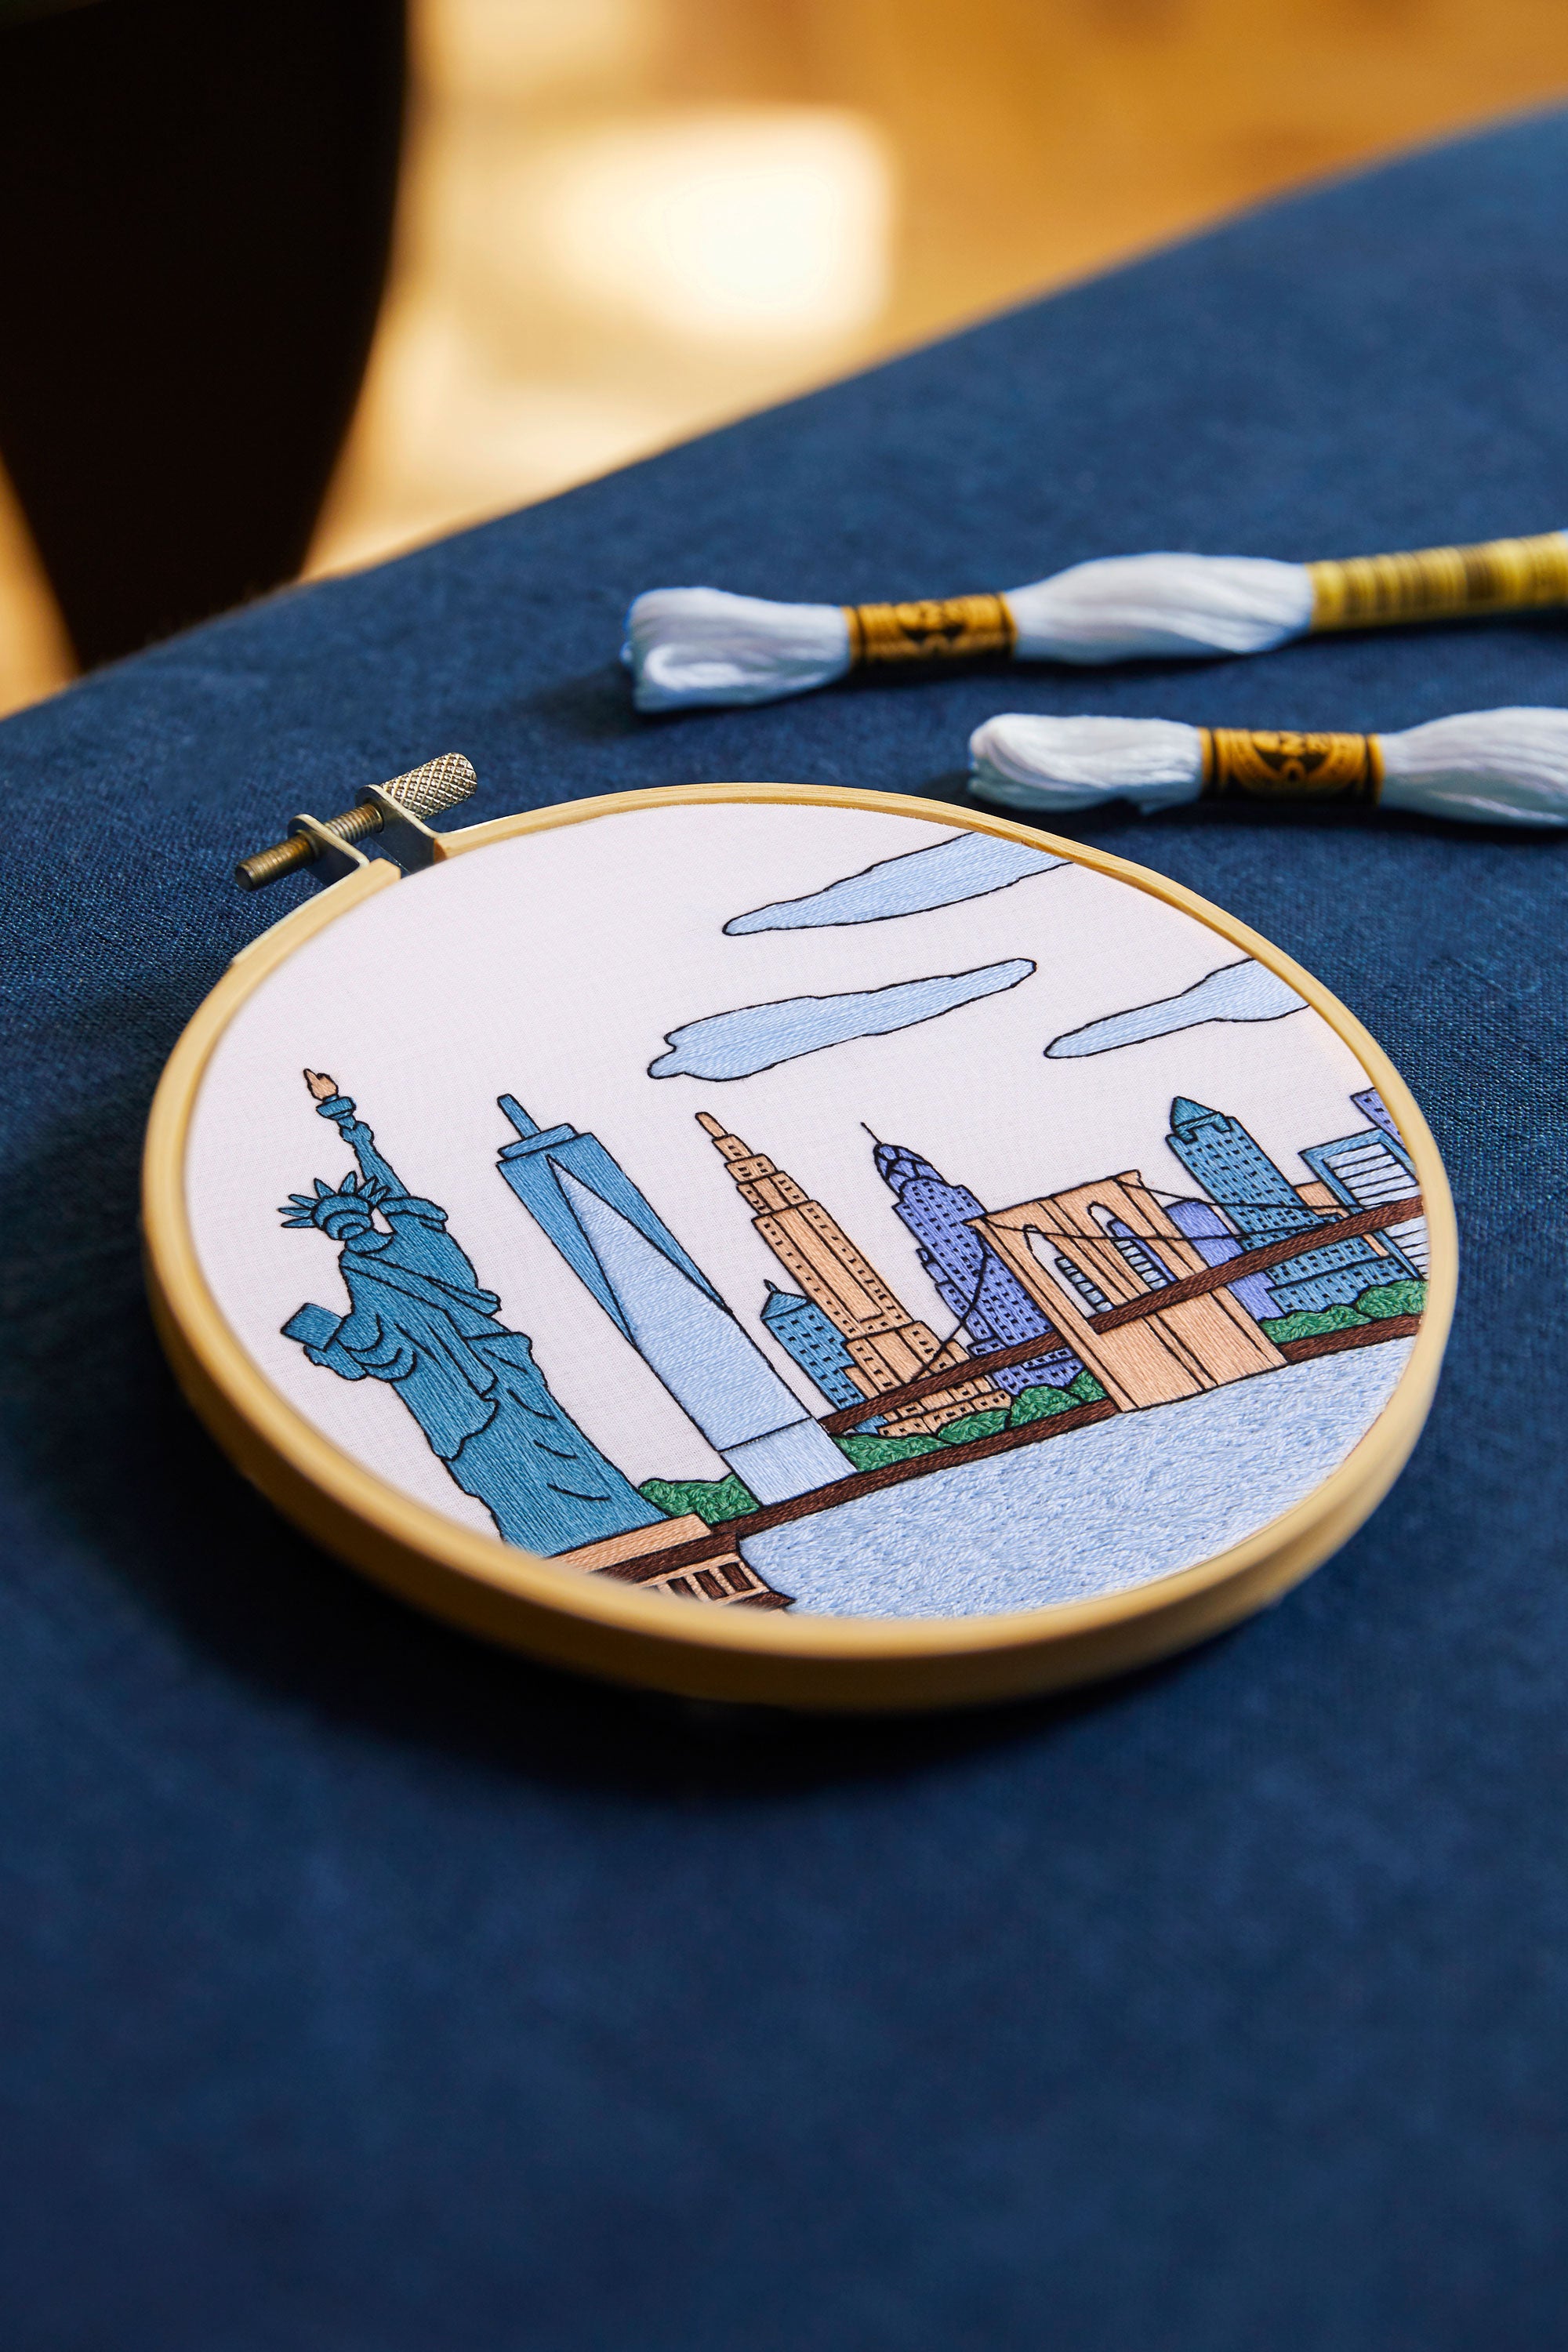 DMC New York City by Kseniia Guseva (Embroidery Kit)